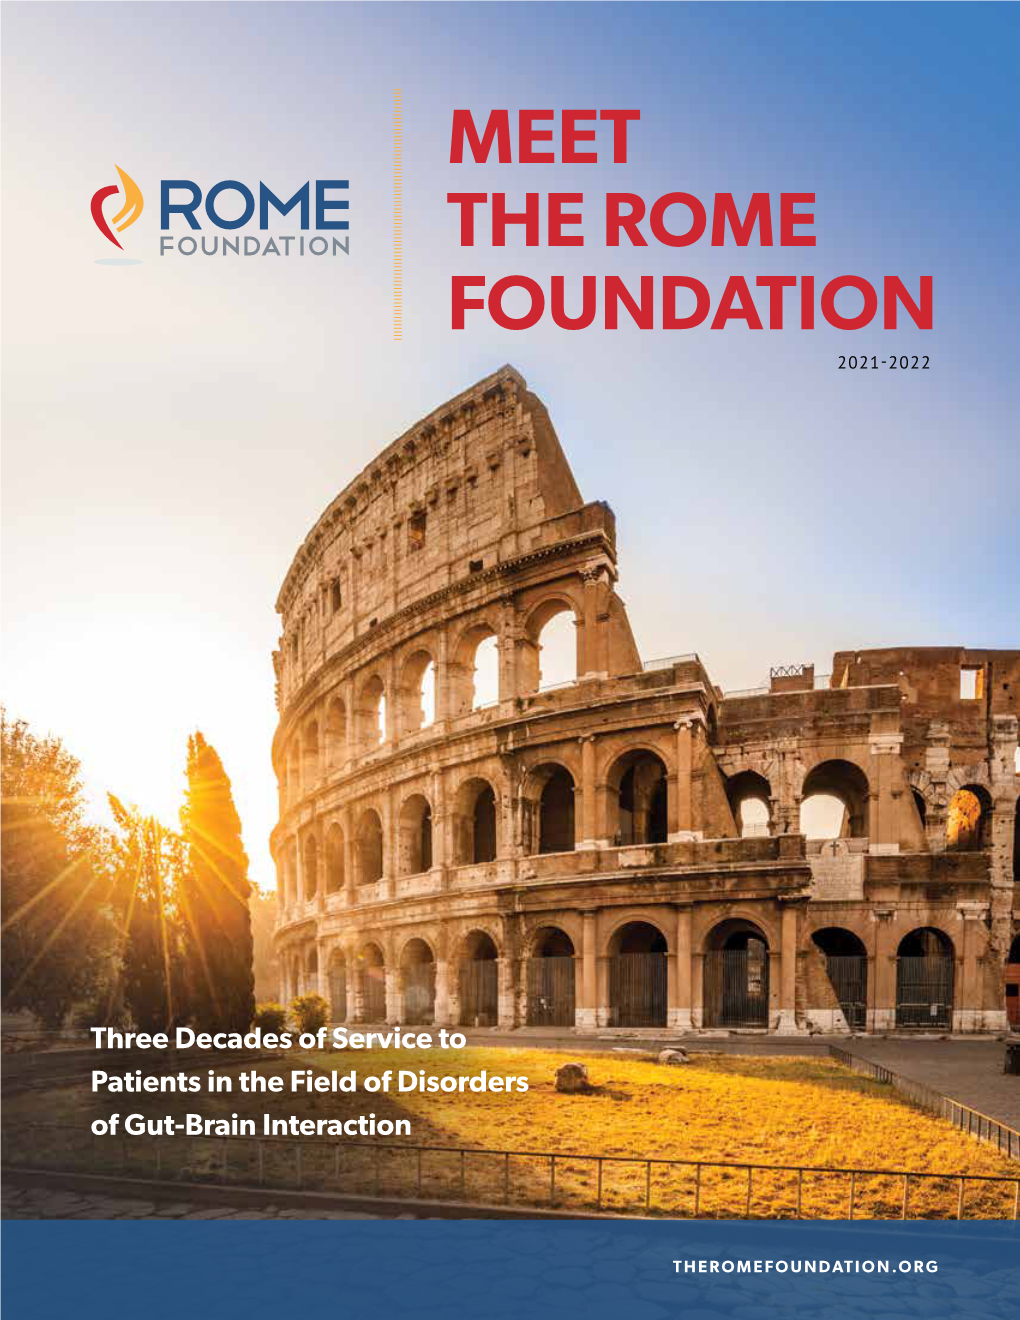 Meet the Rome Foundation 2021-2022